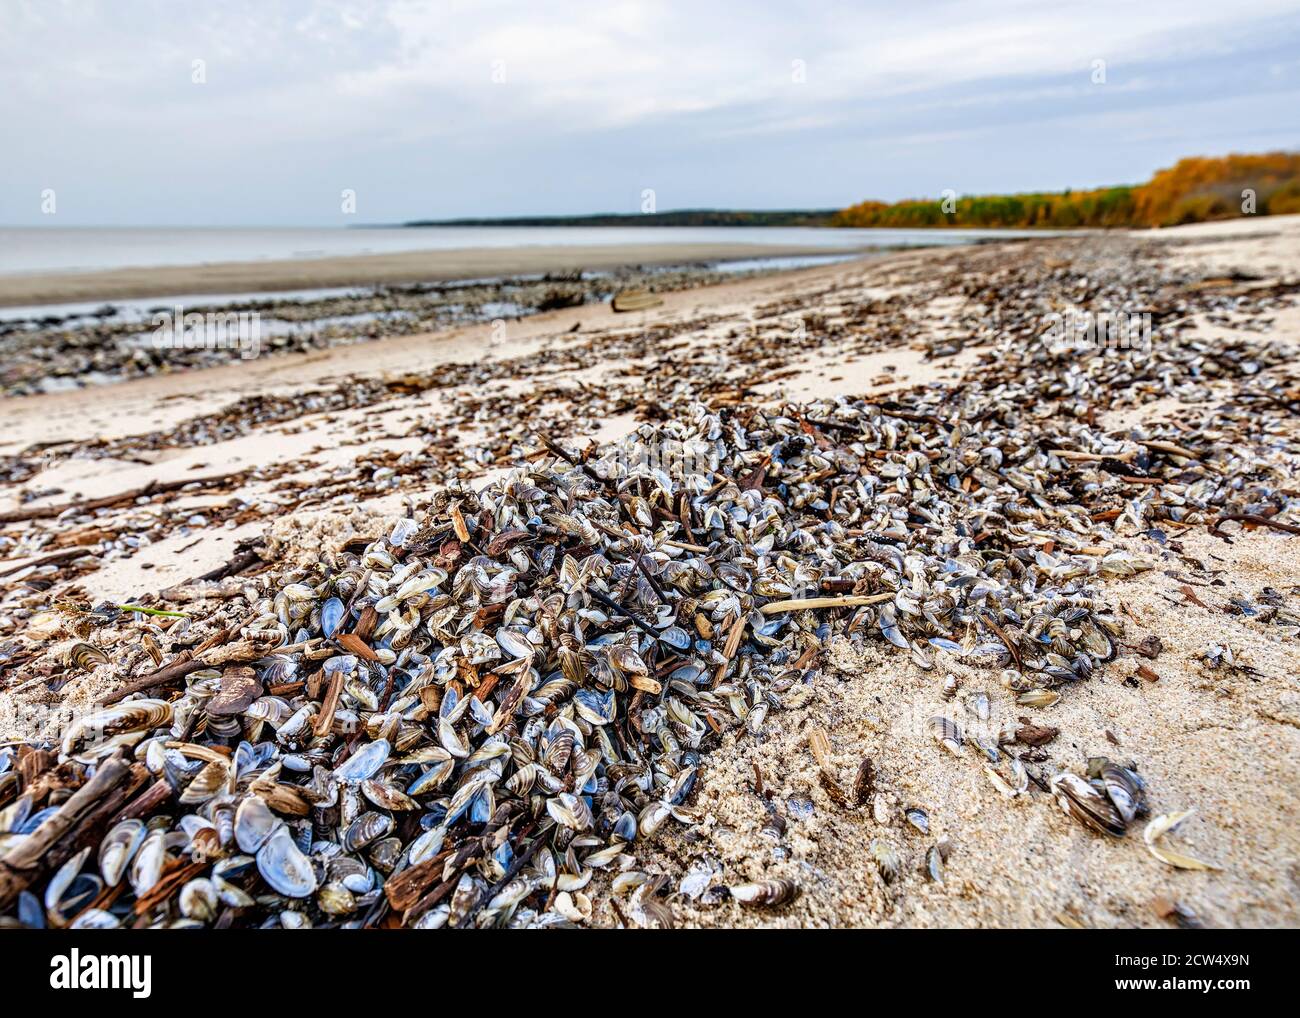 Invasive Zebra Mussels washed up on shore, Grand Beach, Lake Winnipeg, Manitoba, Canada. Stock Photo